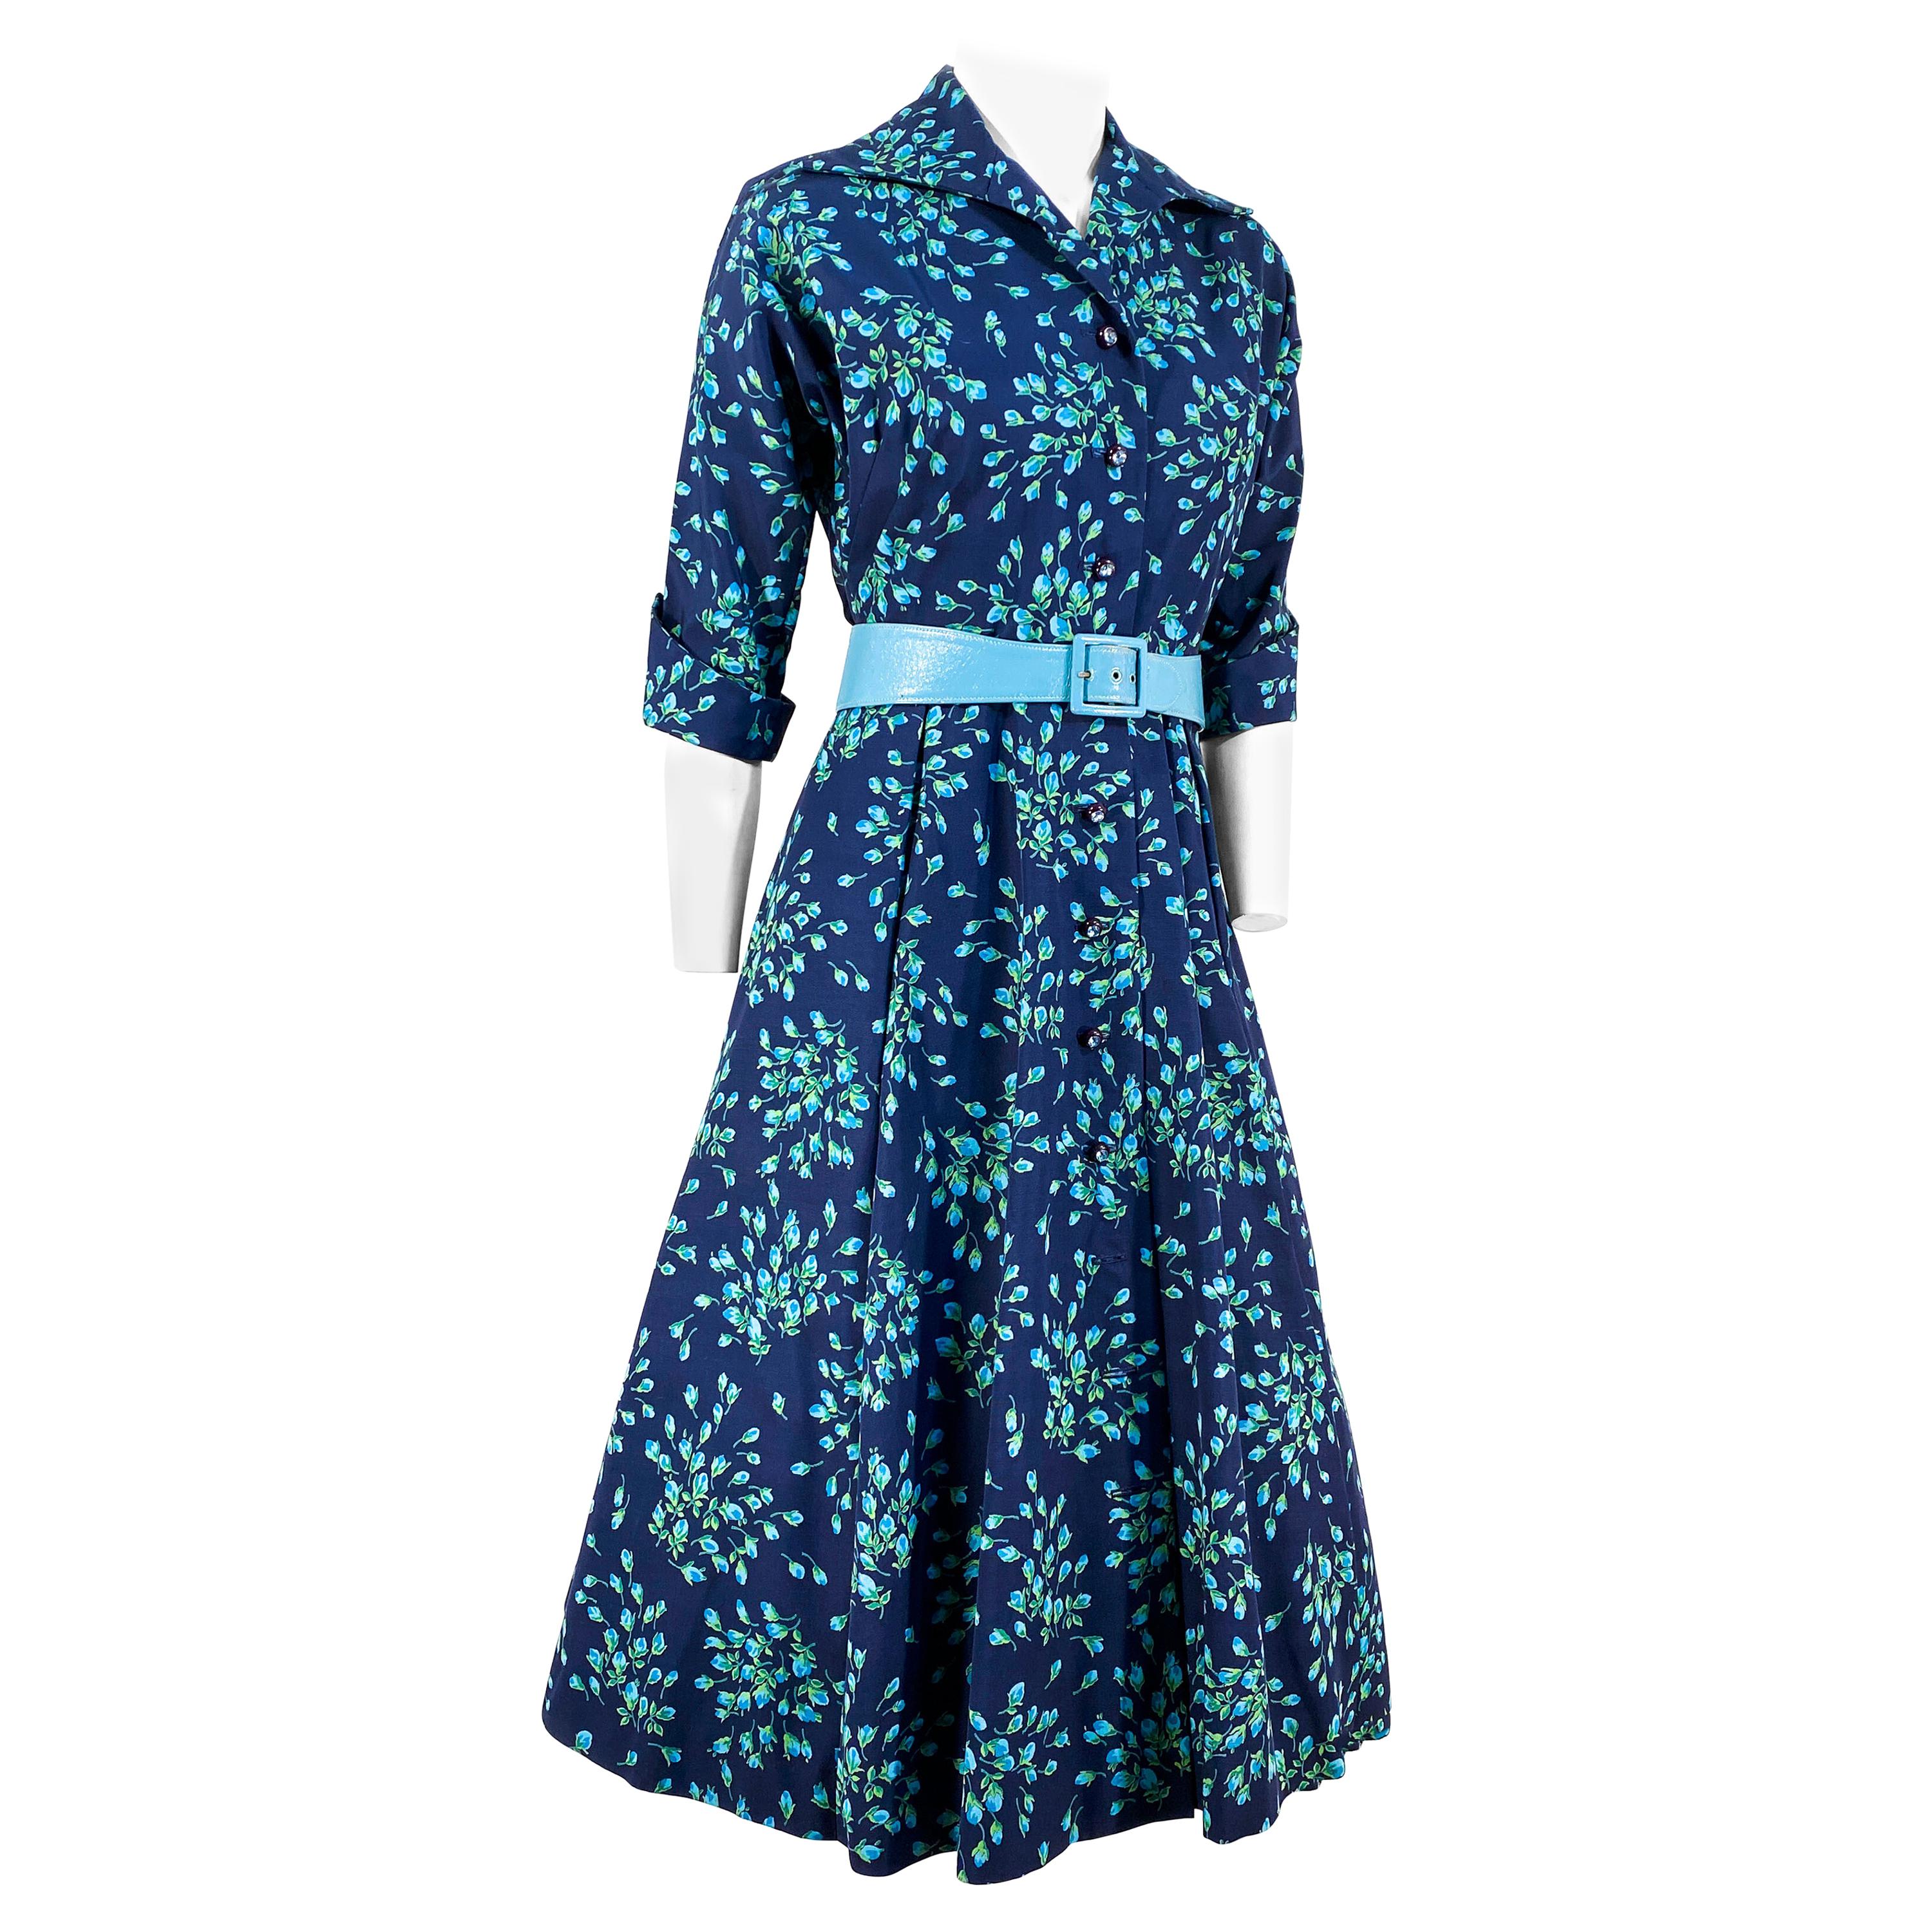 1950s Navy Blue Floral Printed Dress